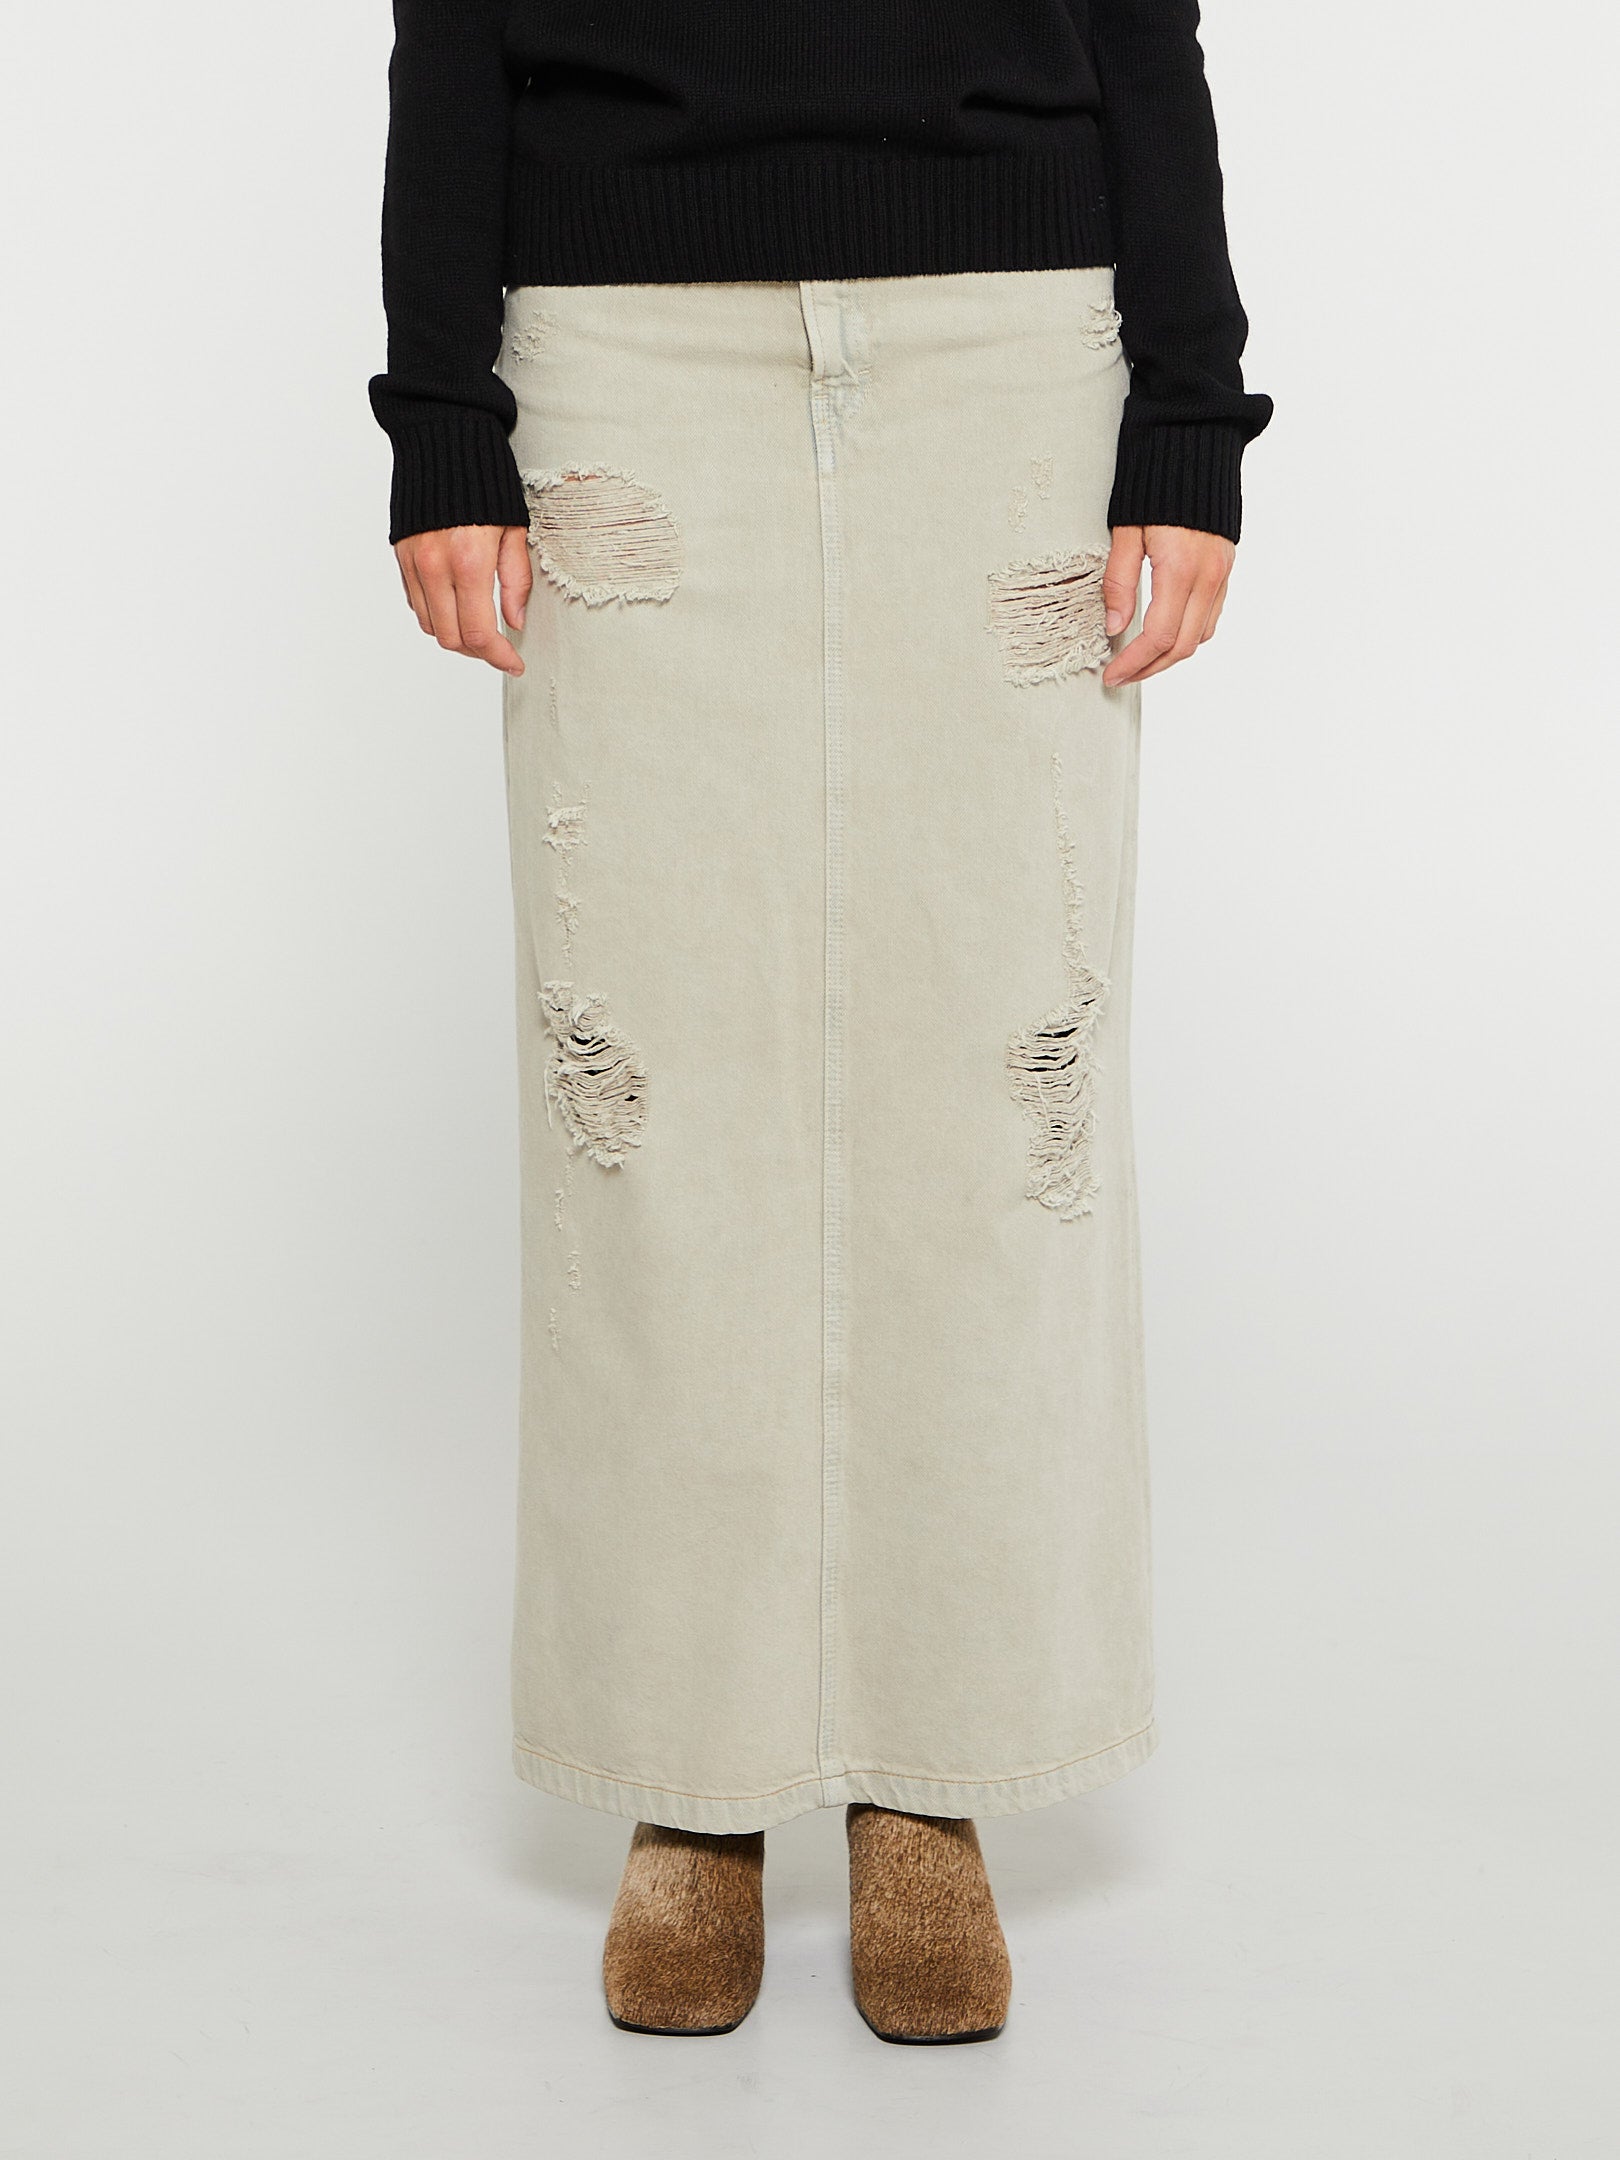 Acne Studios - Skirt in Beige and Grey